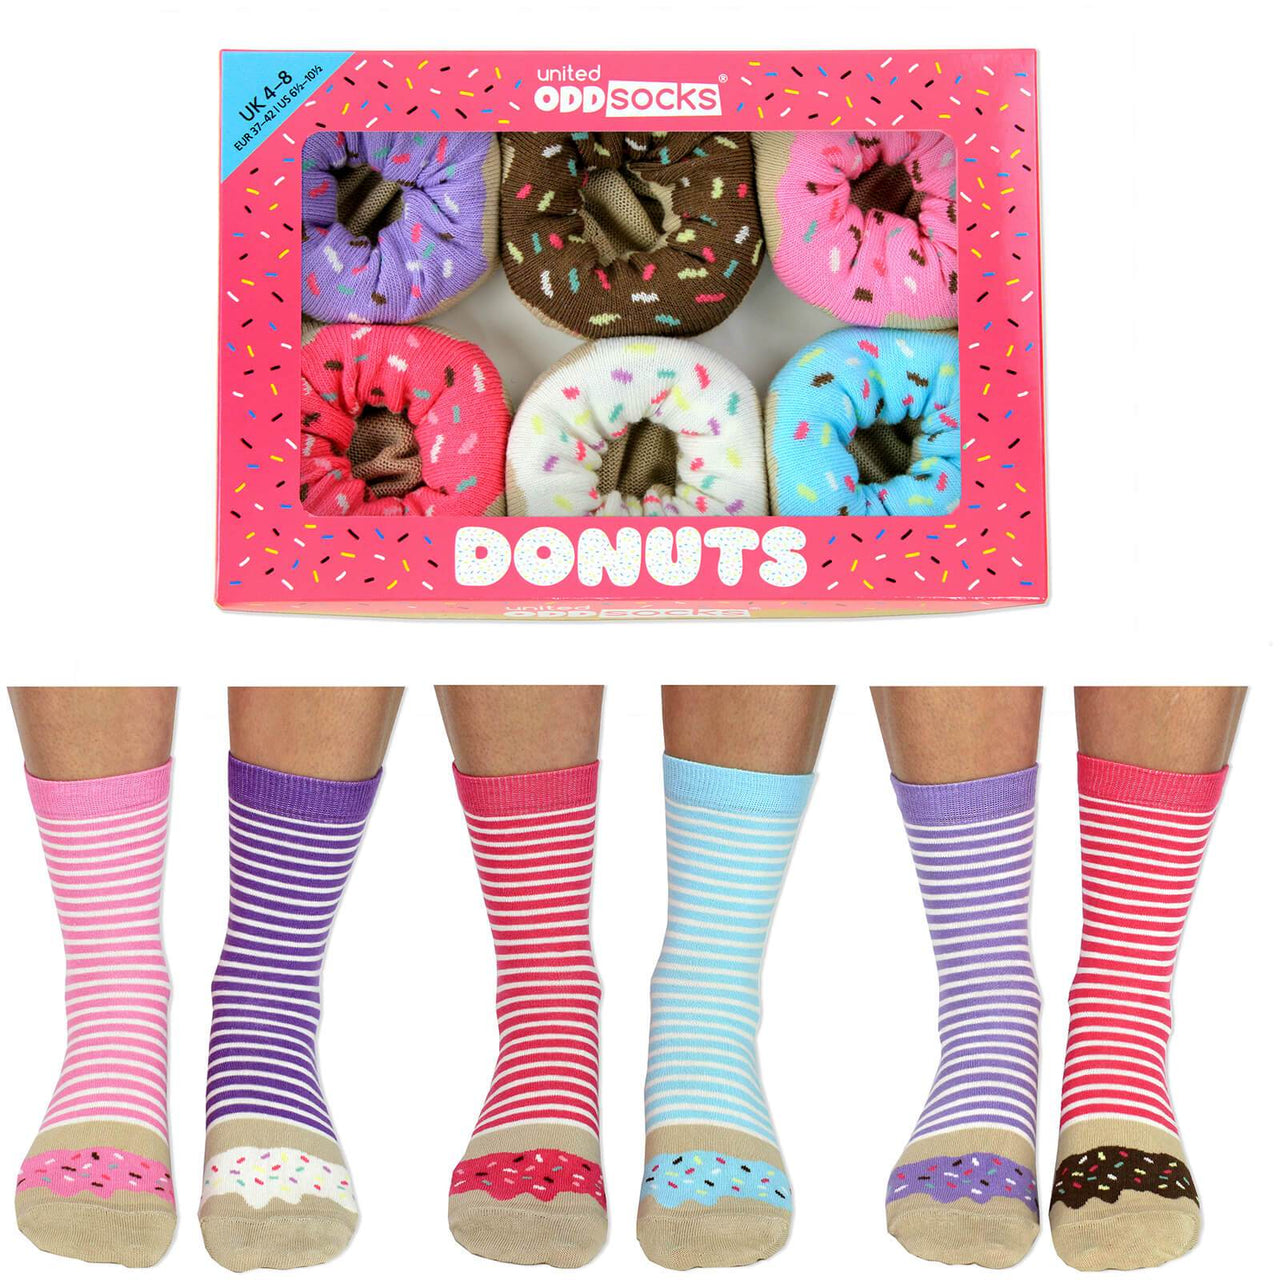 Donut Socks - The Caveman's Guide